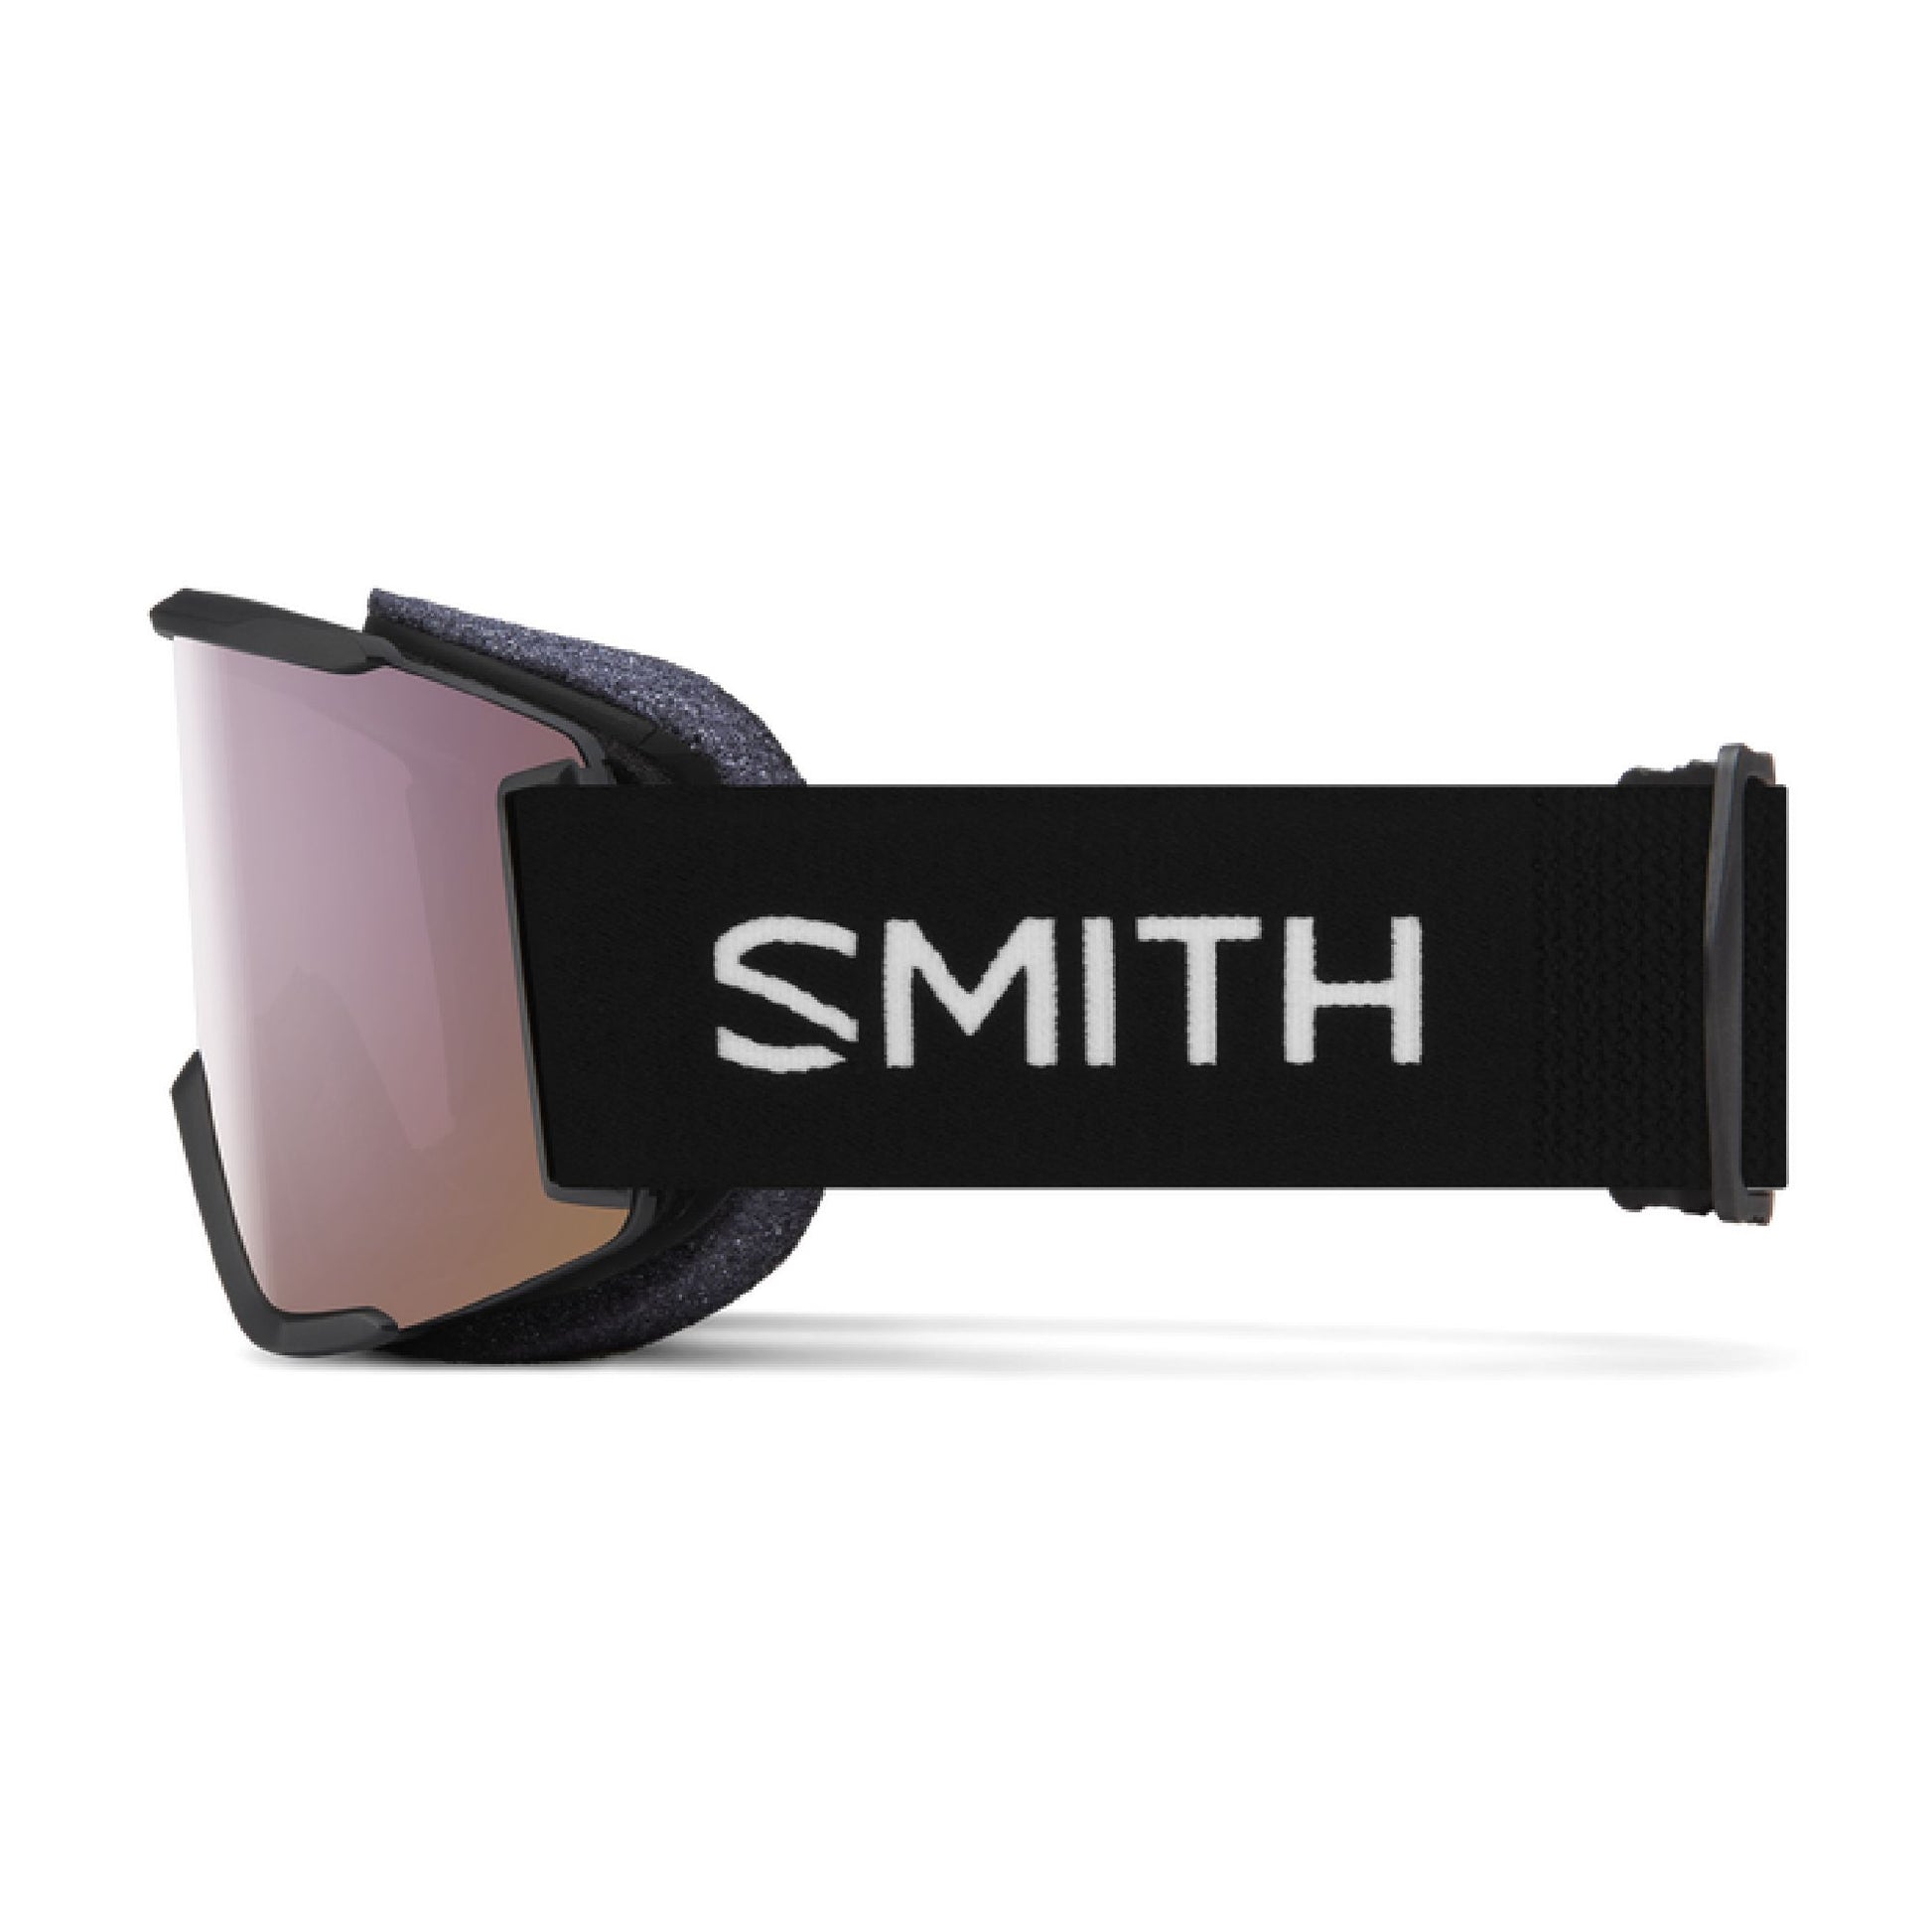 Smith Squad S Snow Goggle Black / ChromaPop Everyday Rose Gold Mirror Snow Goggles